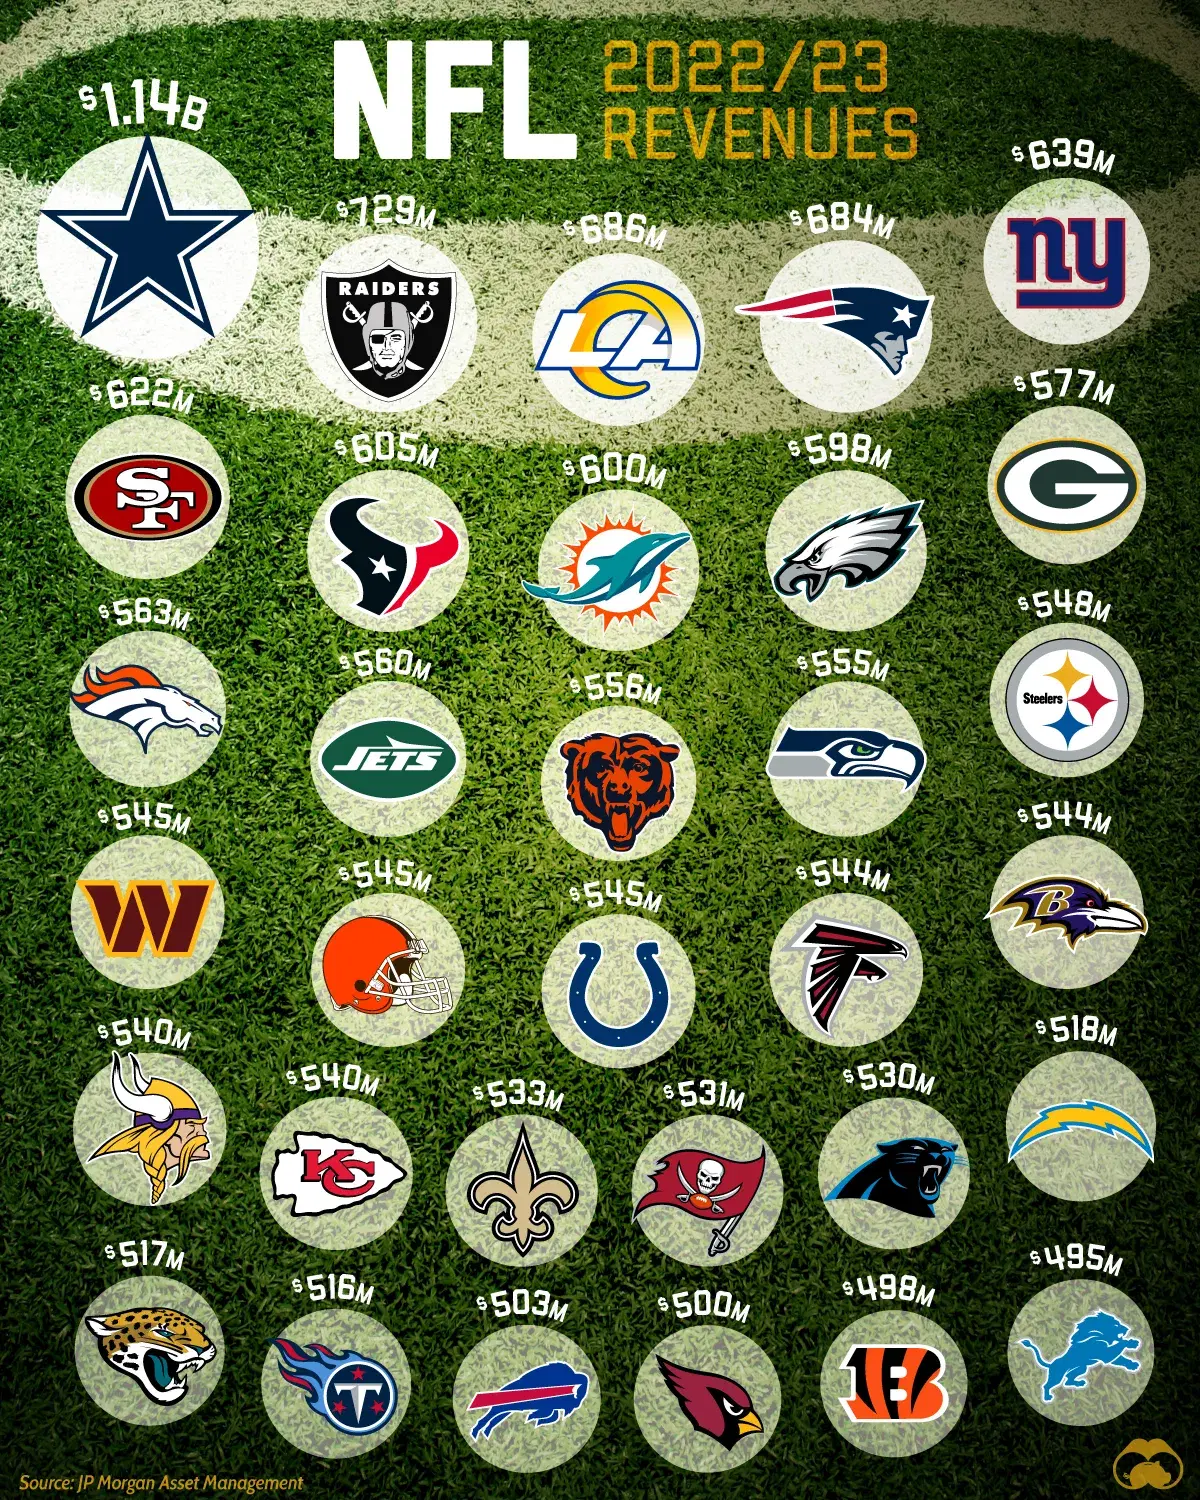 Every NFL Team's Revenue Compared